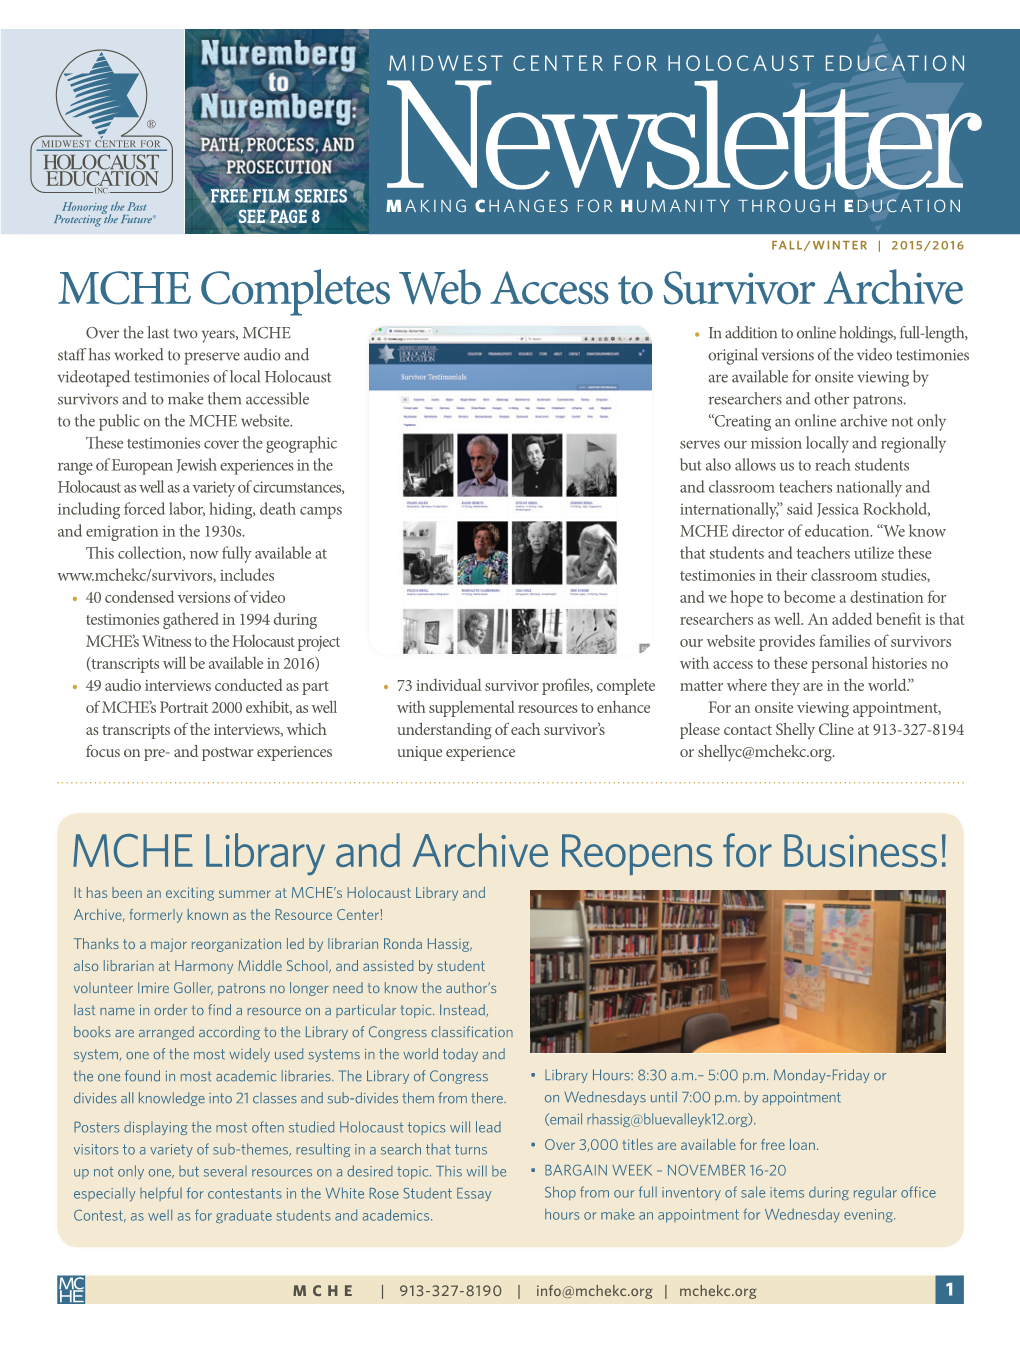 MCHE Completes Web Access to Survivor Archive